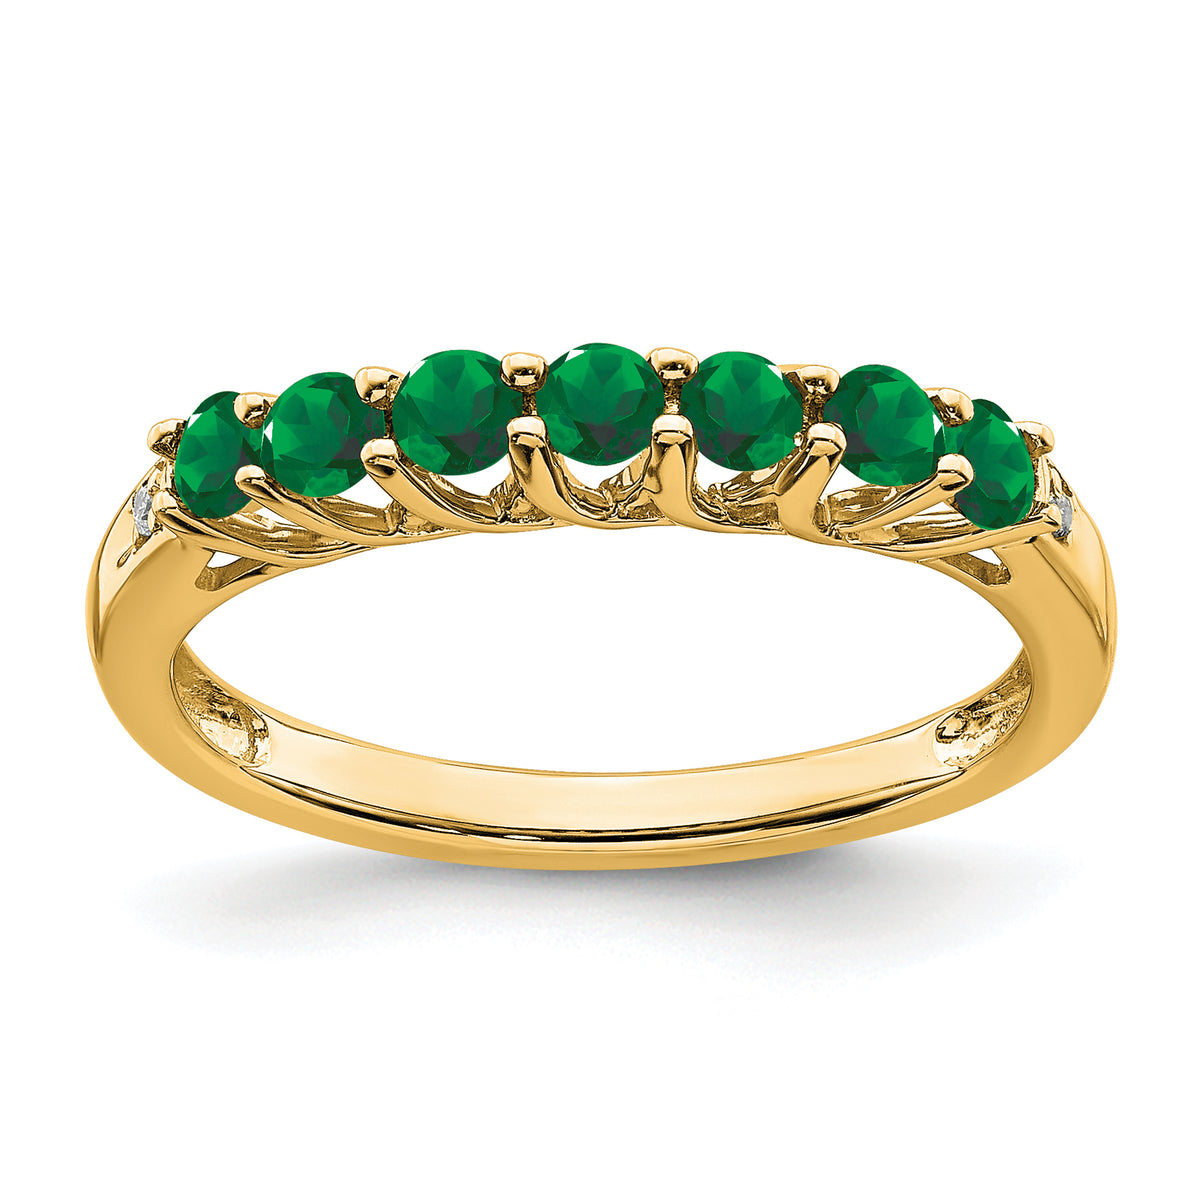 10k Created Emerald and Diamond 7-stone Ring